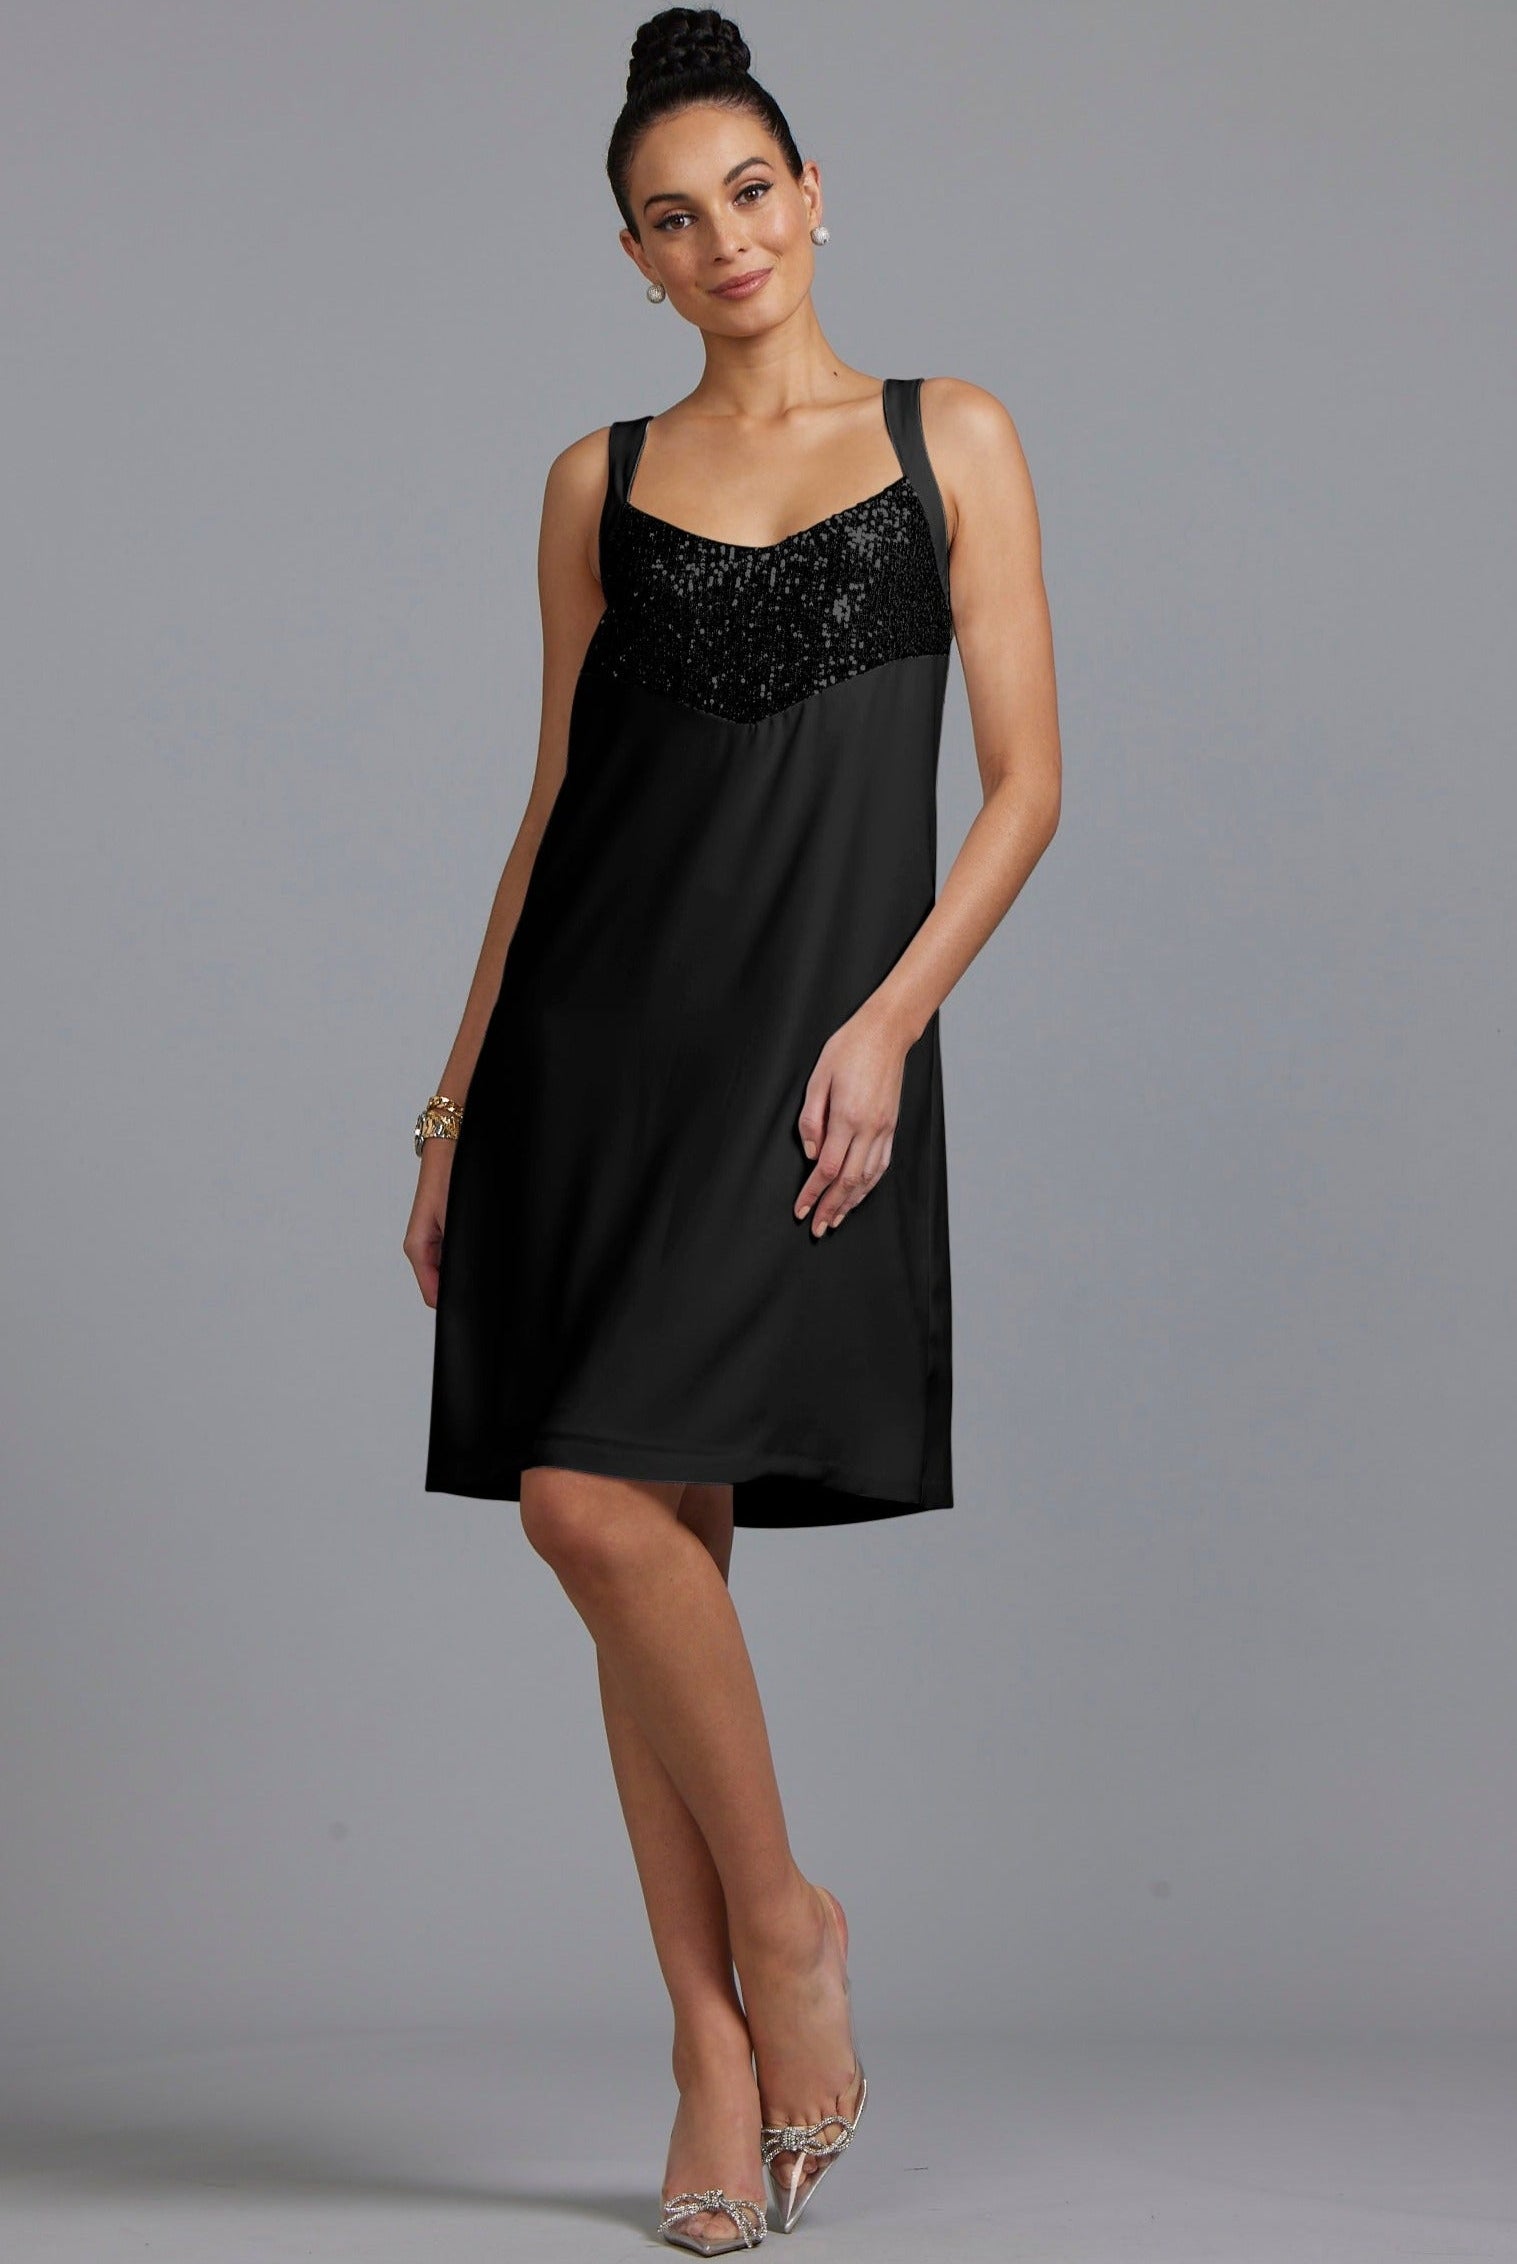 PAULA RYAN Sequin Bodice Dress - Black PRE ORDER - Paula Ryan